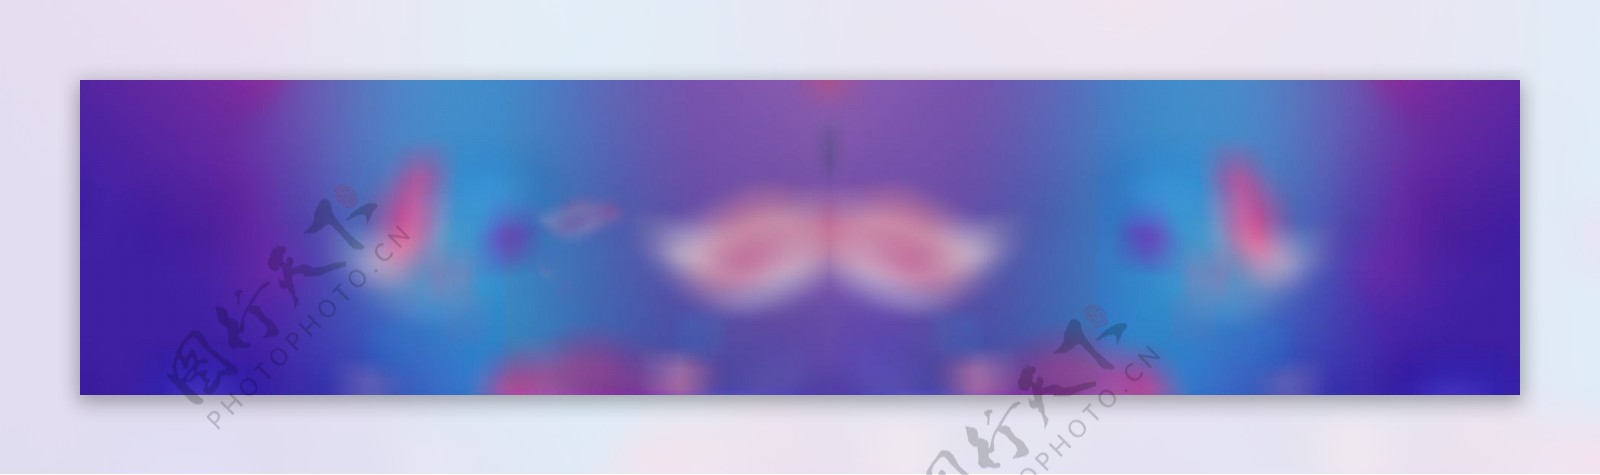 紫色梦幻唯美背景banner